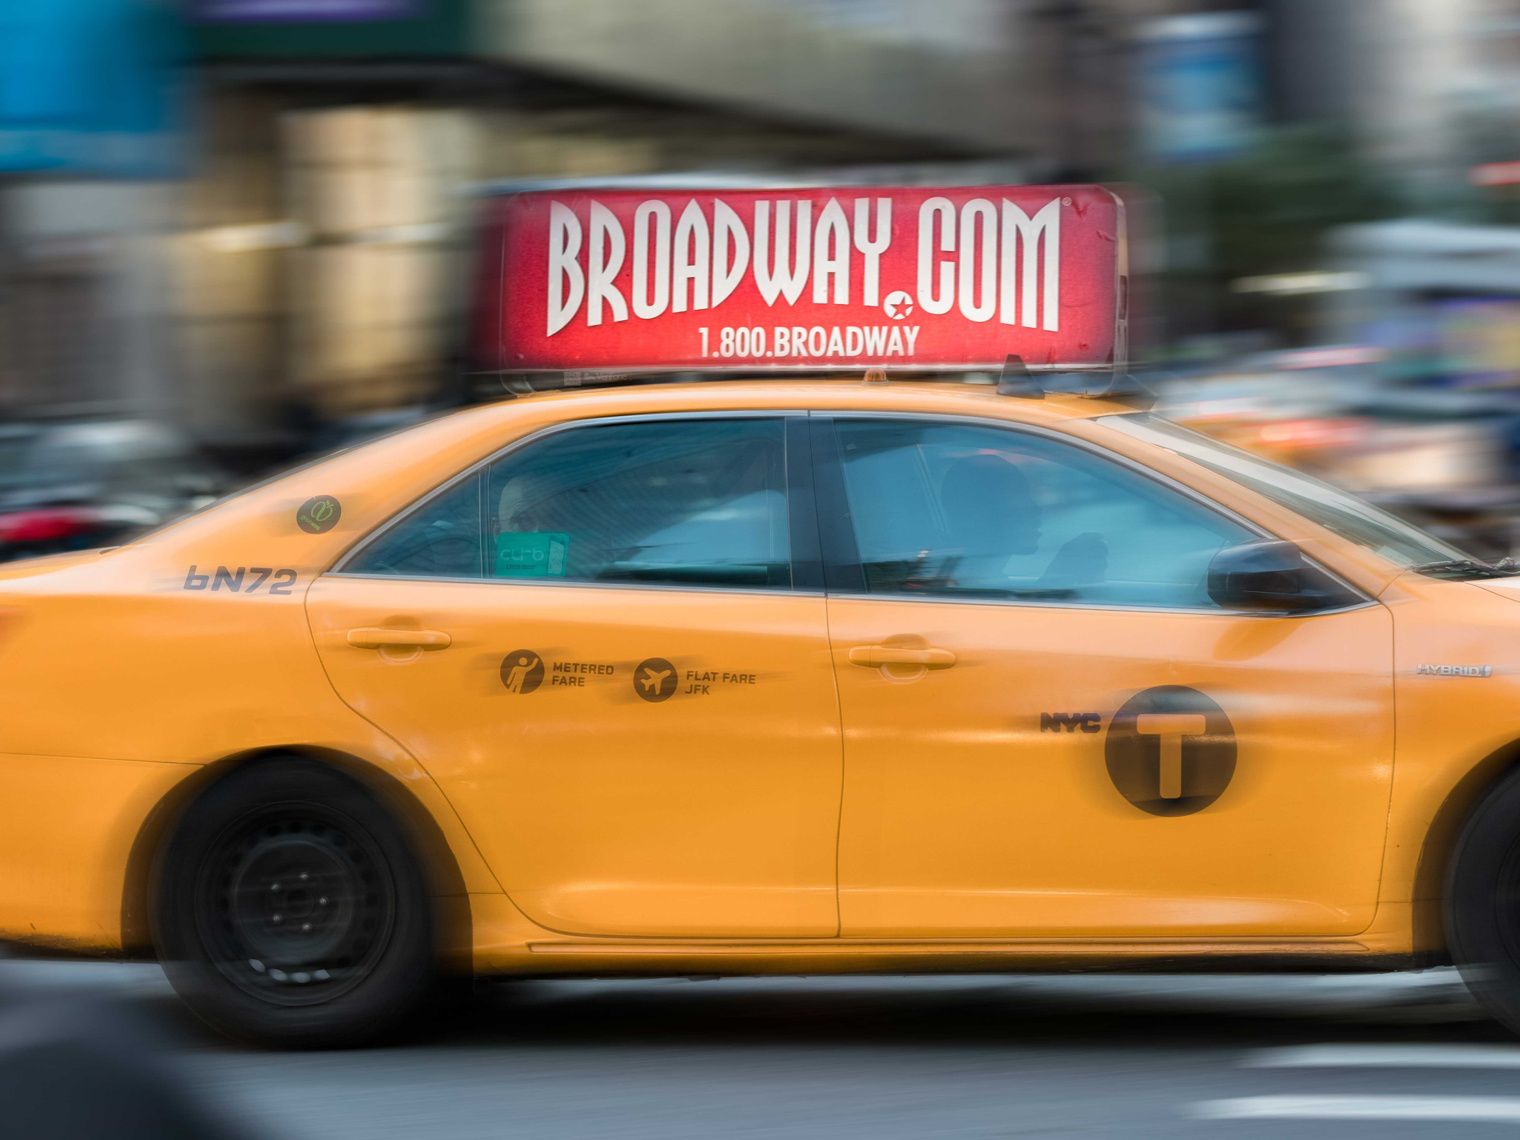 Broadway Taxi Top